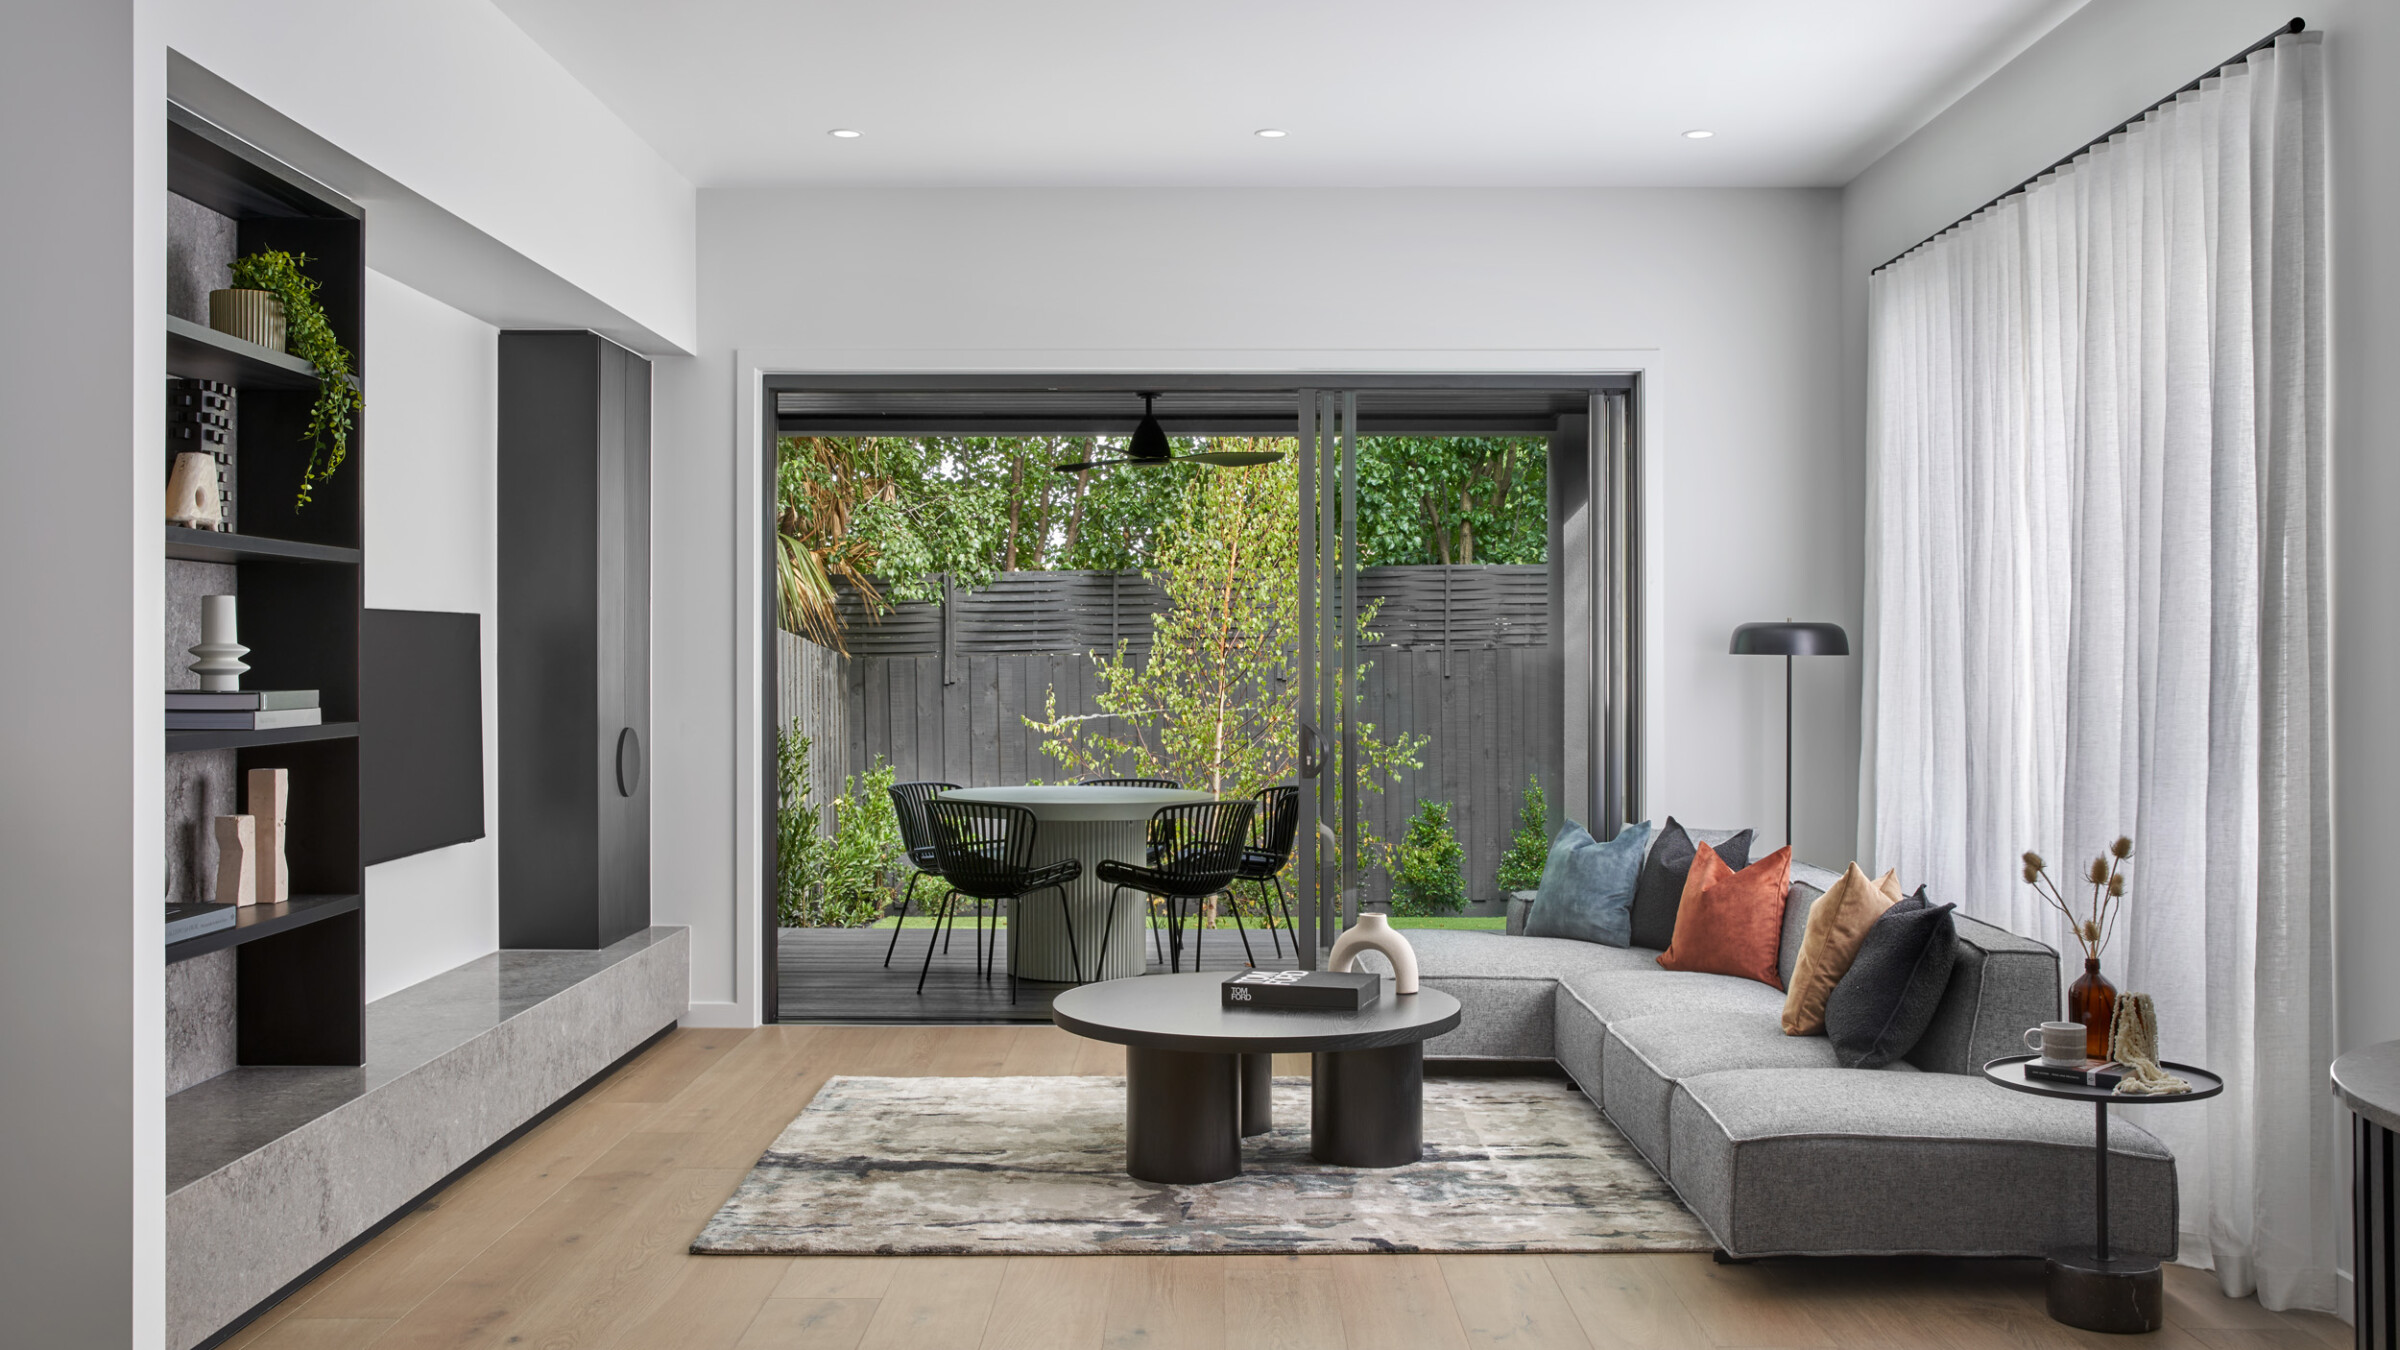 Duplex Home Builder Melbourne | Dual Occupancy Home Designs